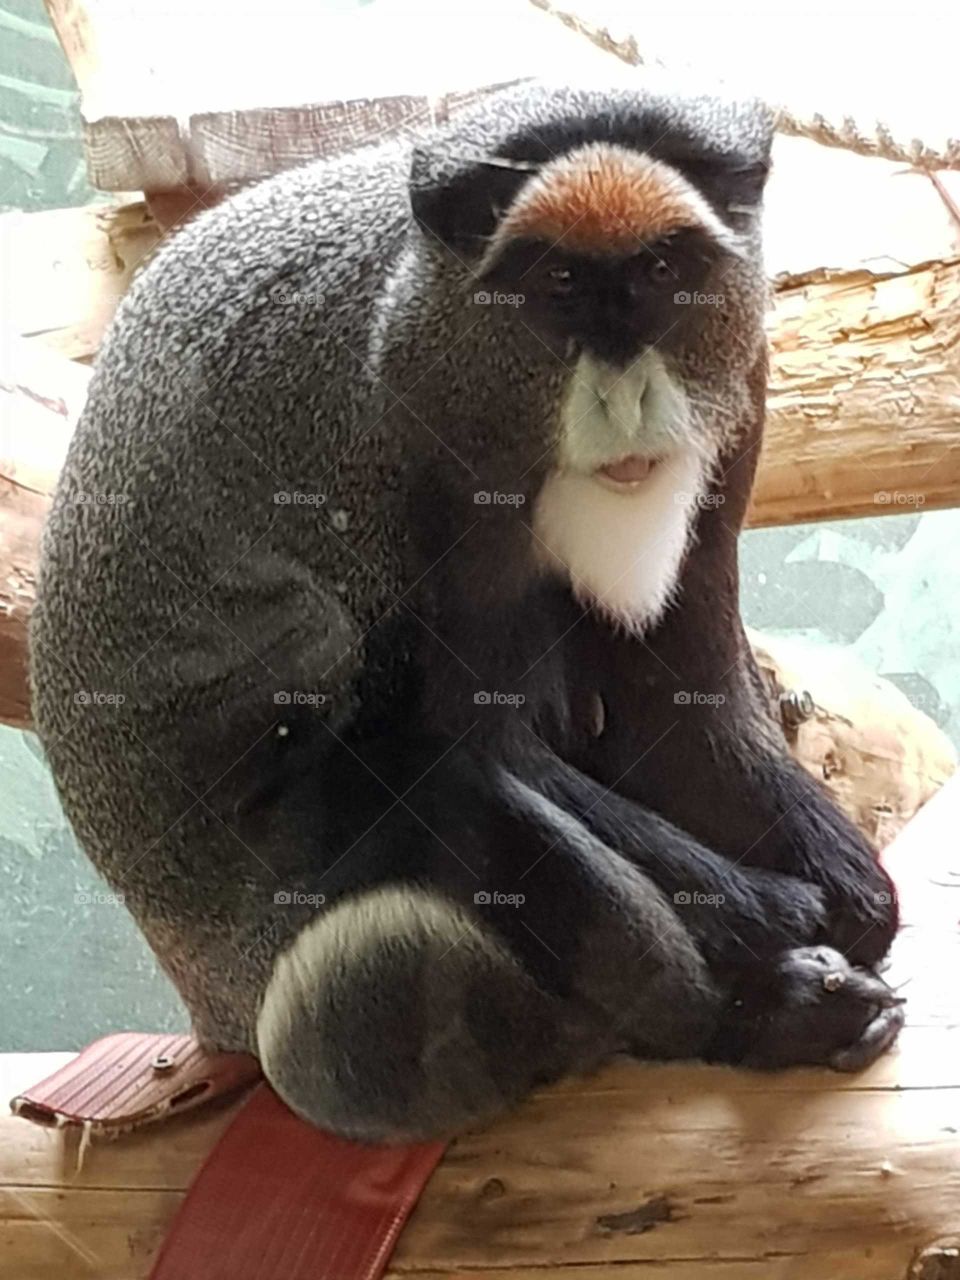 Monkey At Zoo